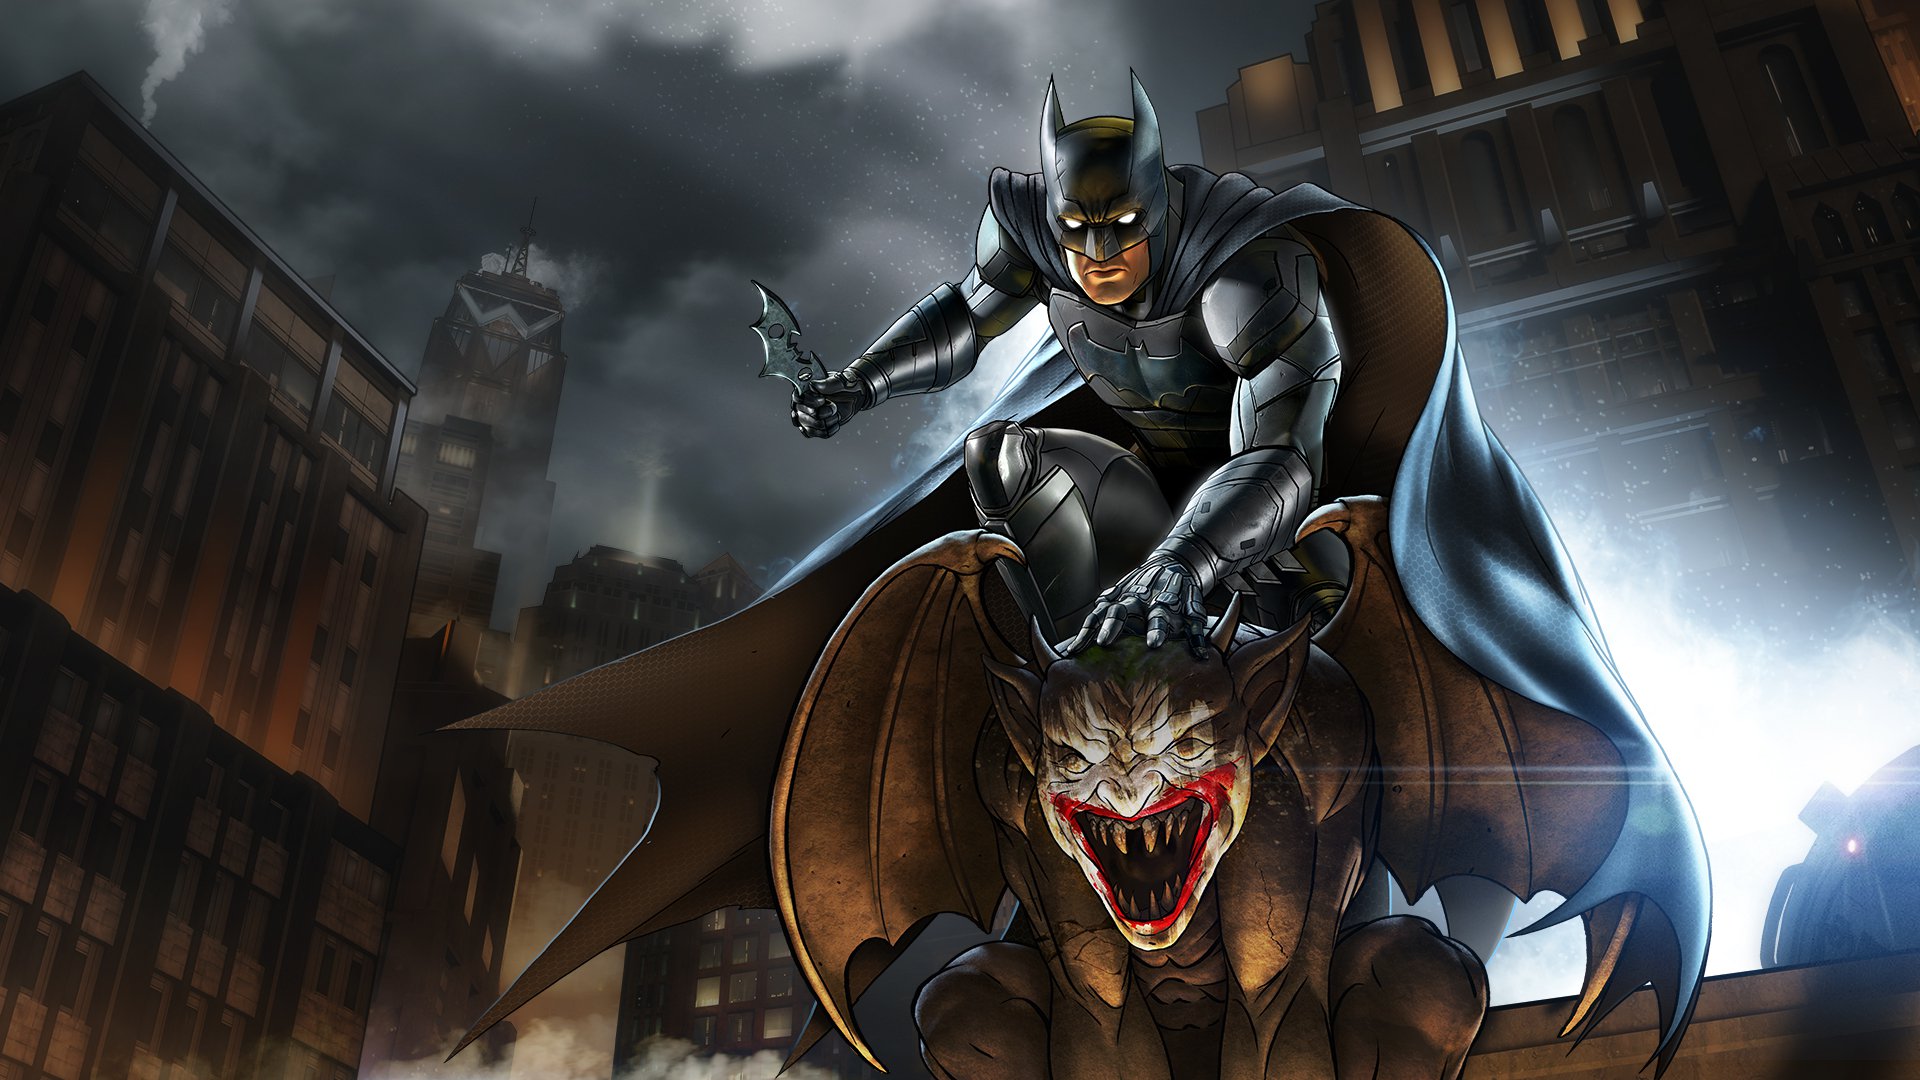 Batman: The Telltale Series HD Wallpaper